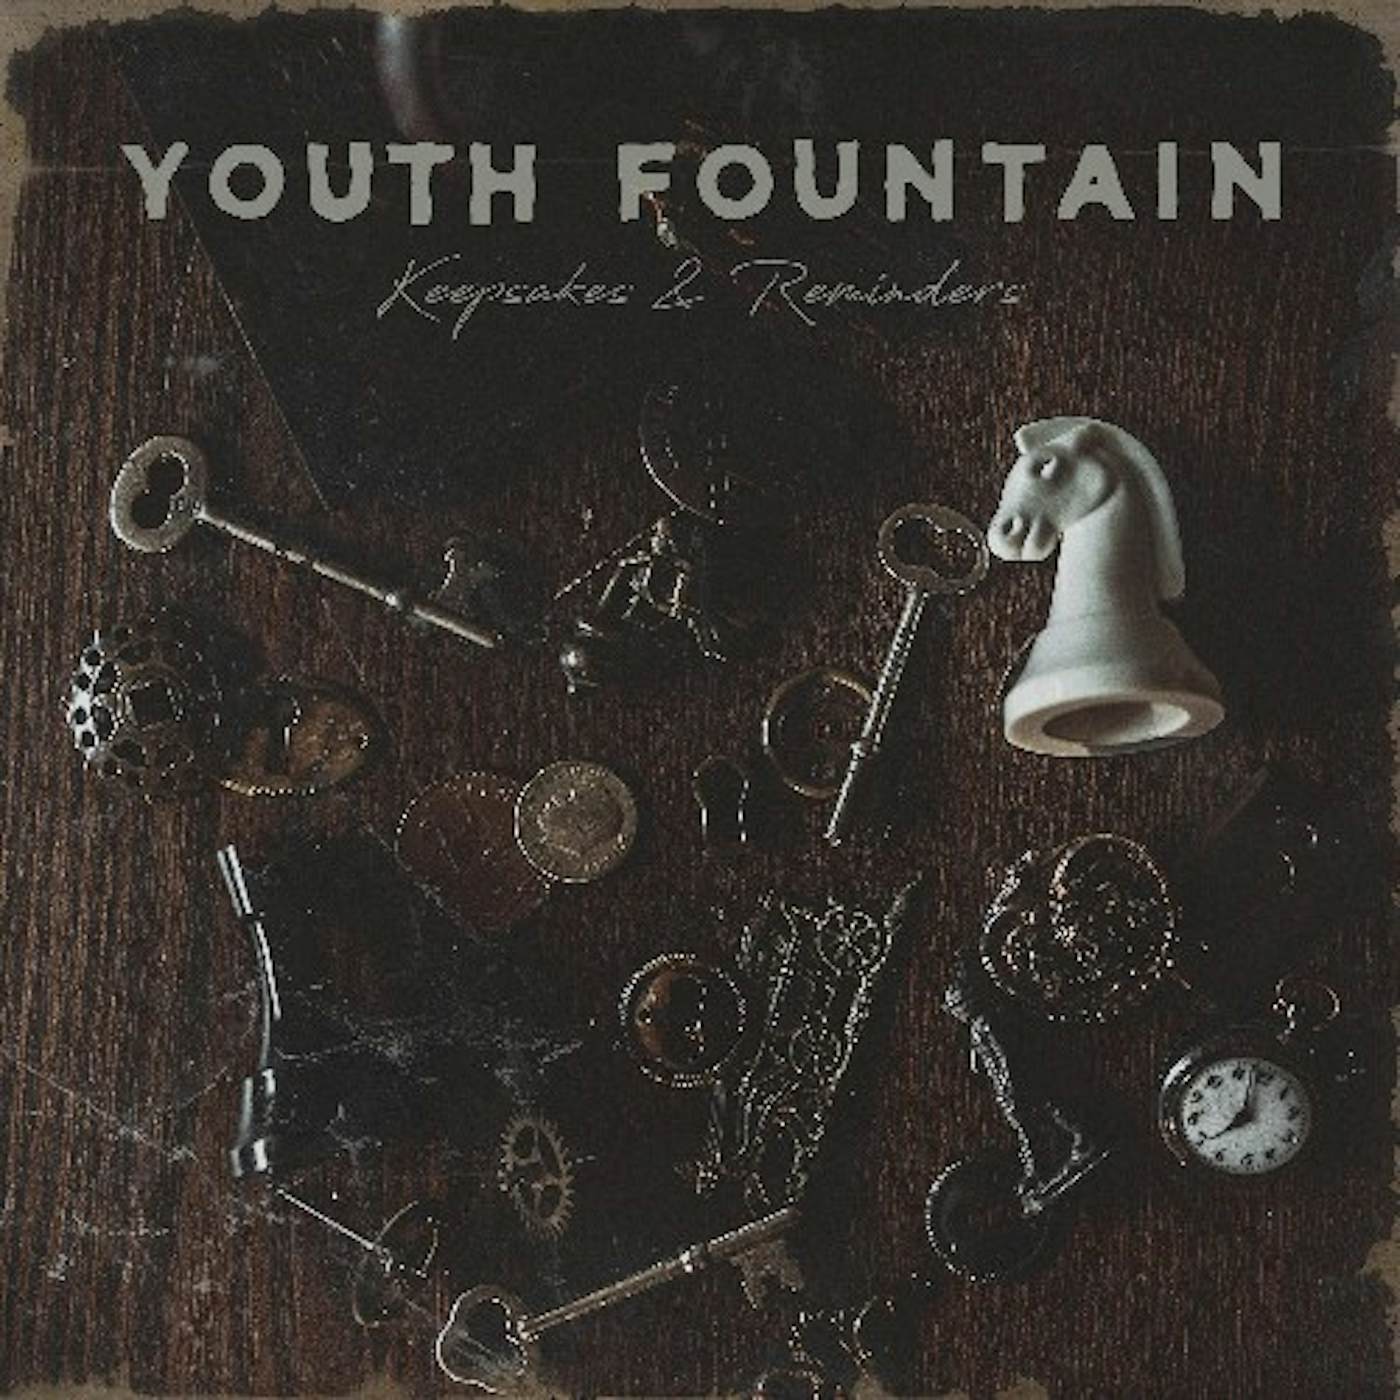 Youth Fountain Keepsakes & Reminders Vinyl Record